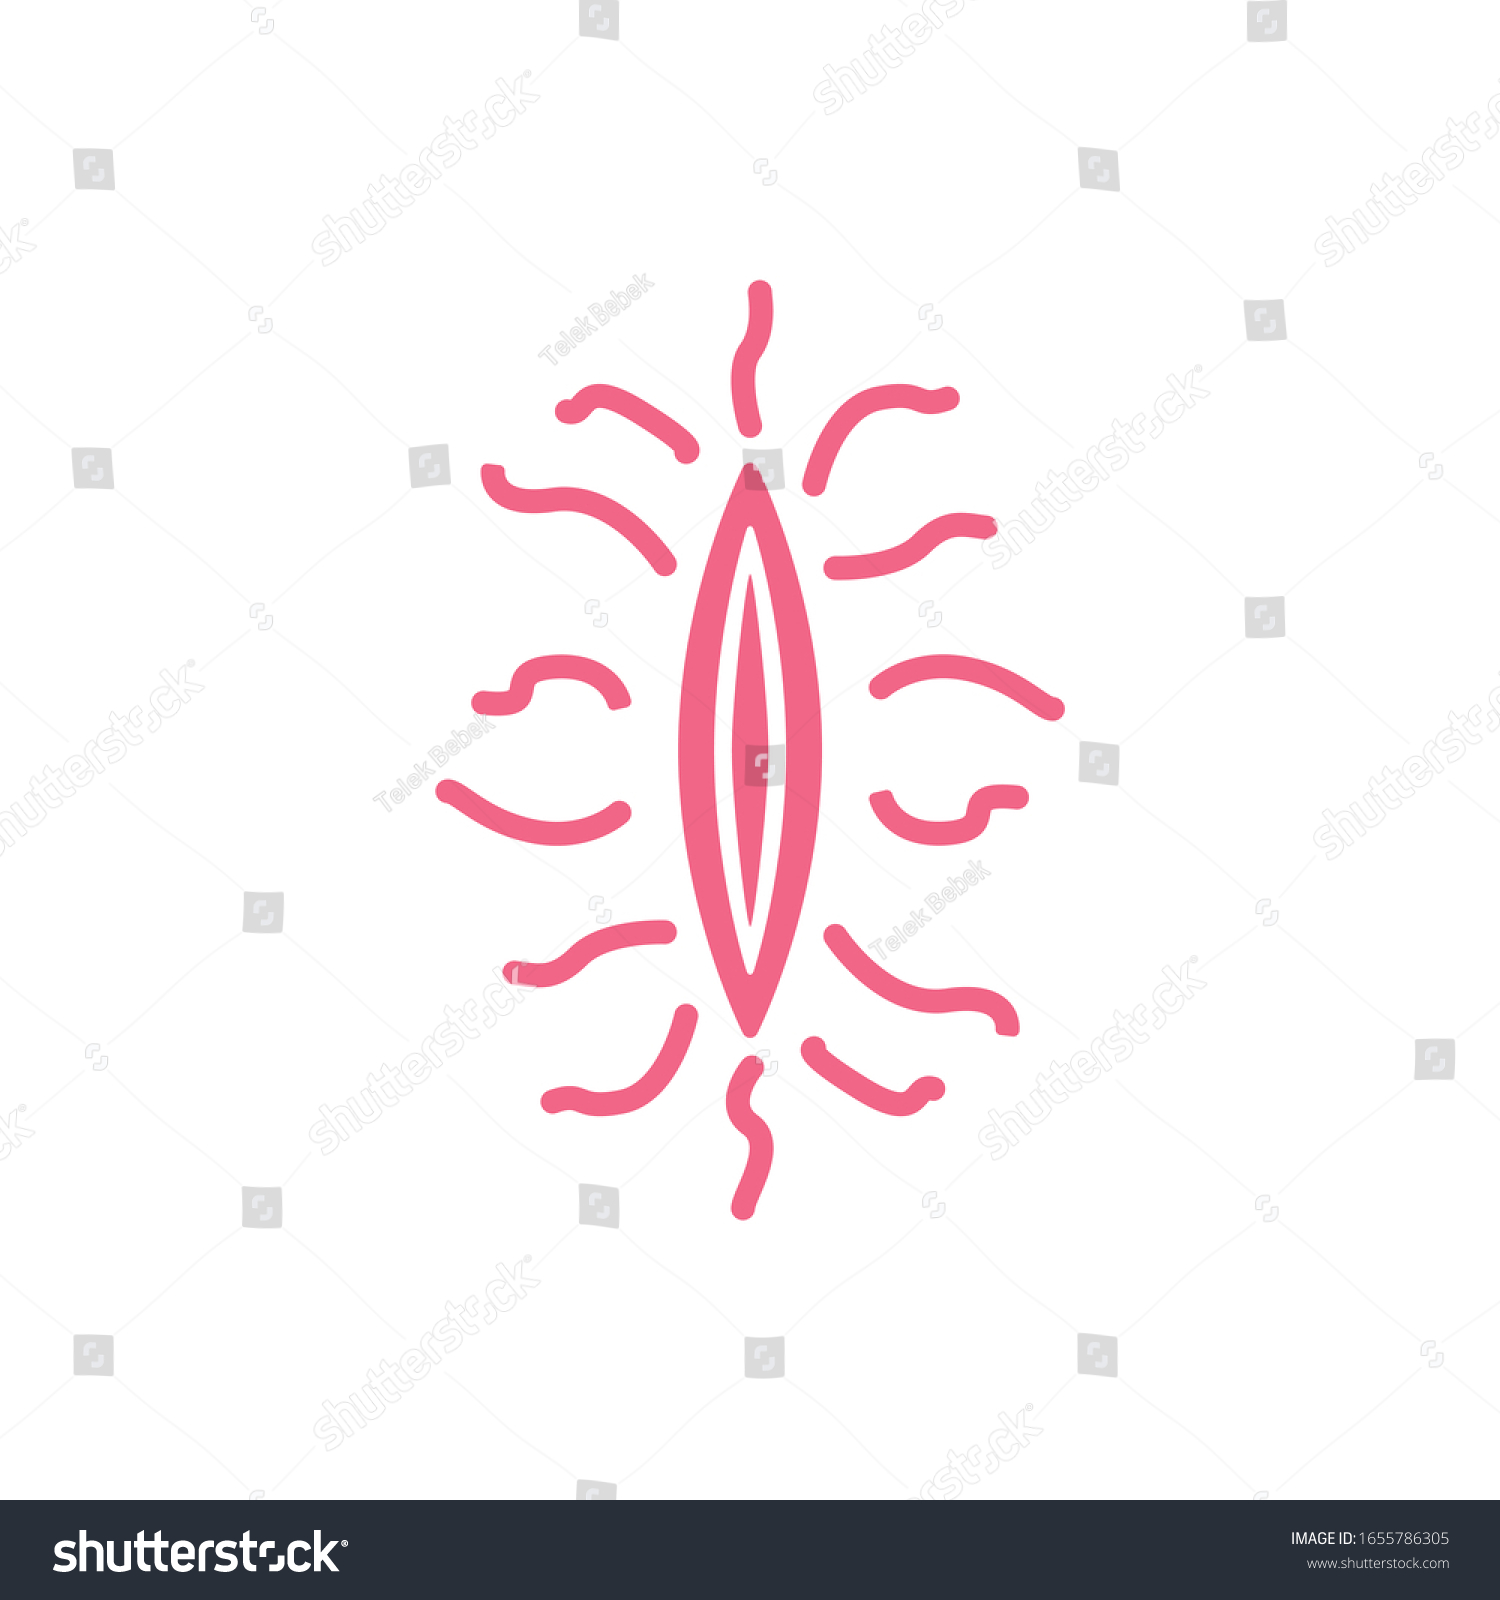 Pink Vagina Logo Design Vector Illustration เวกเตอร์สต็อก ปลอดค่าลิขสิทธิ์ 1655786305